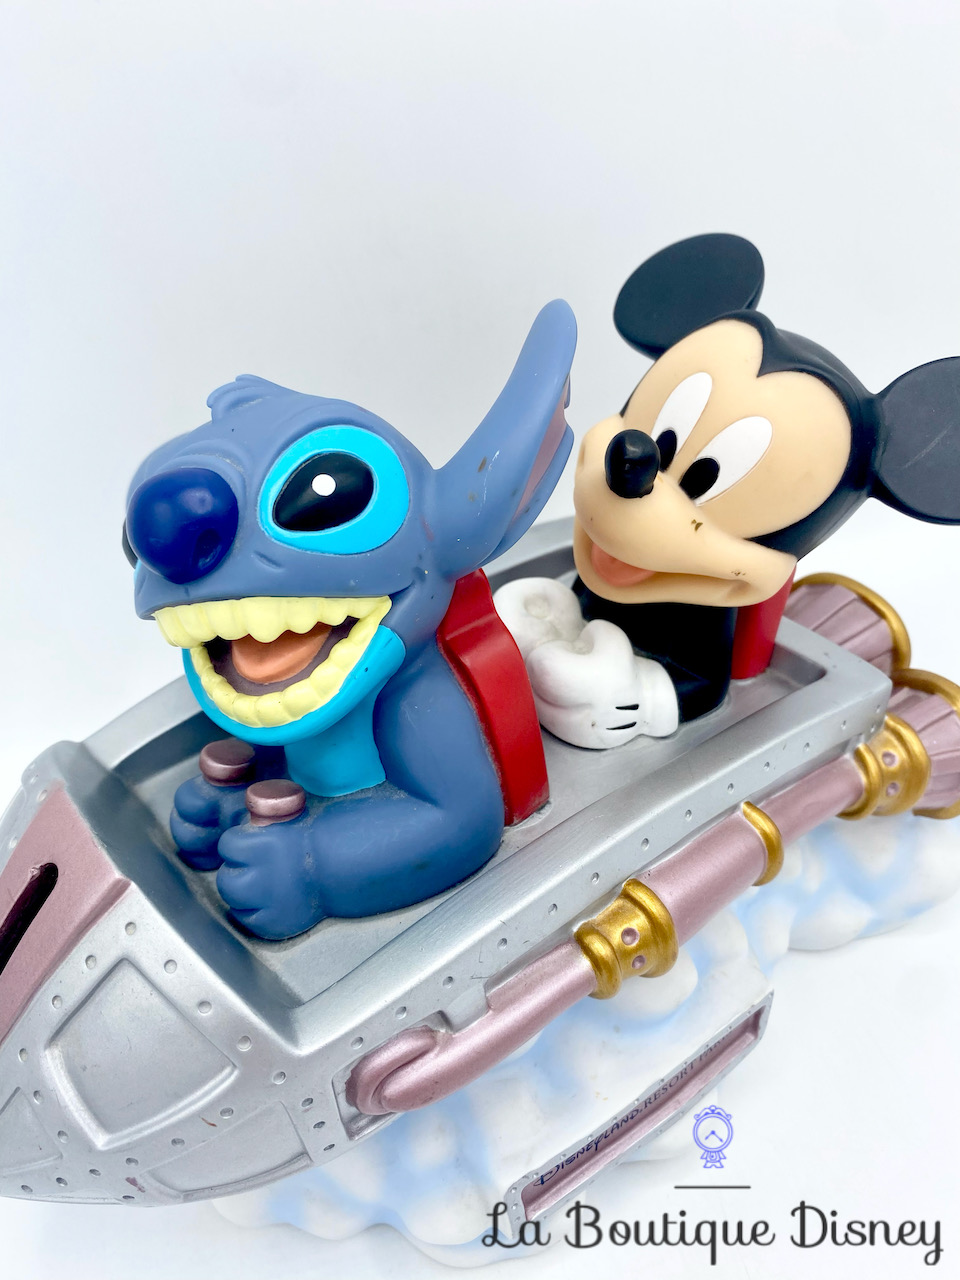 Tirelire Disney Lilo & Stitch - Stitch • La Tirelire